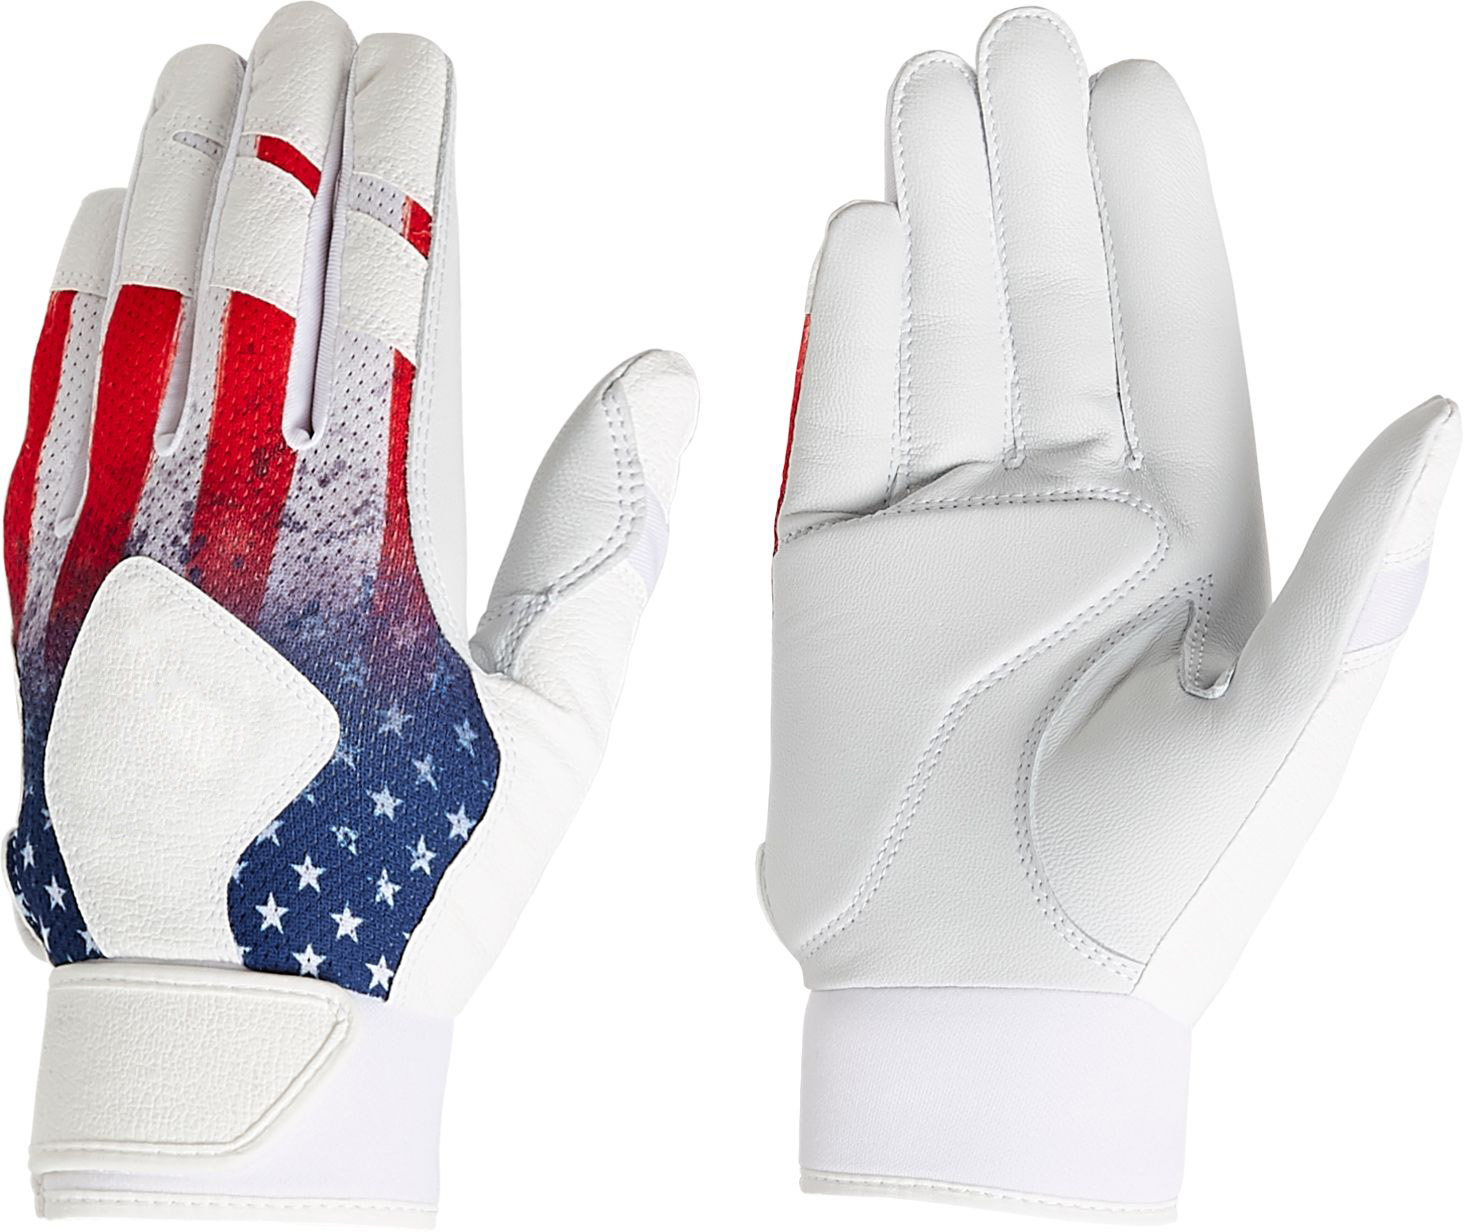 2020 new design batting gloves factory price wholesale smooth goatskin leather batting gloves